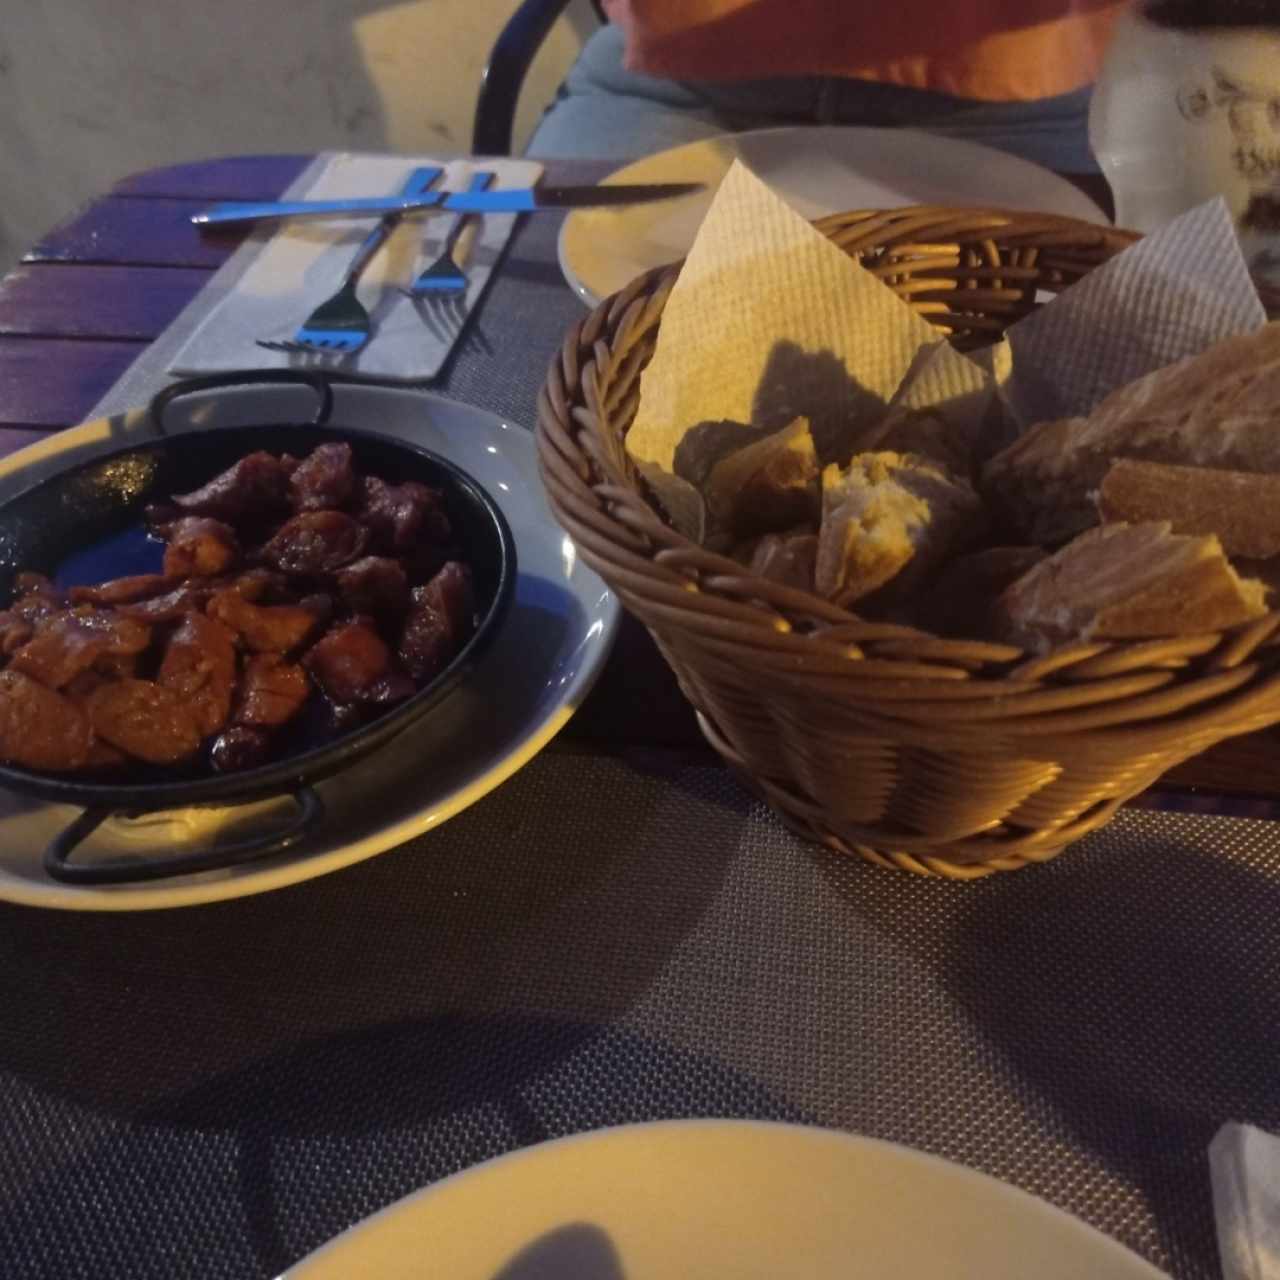 Chorizo a la Sidra